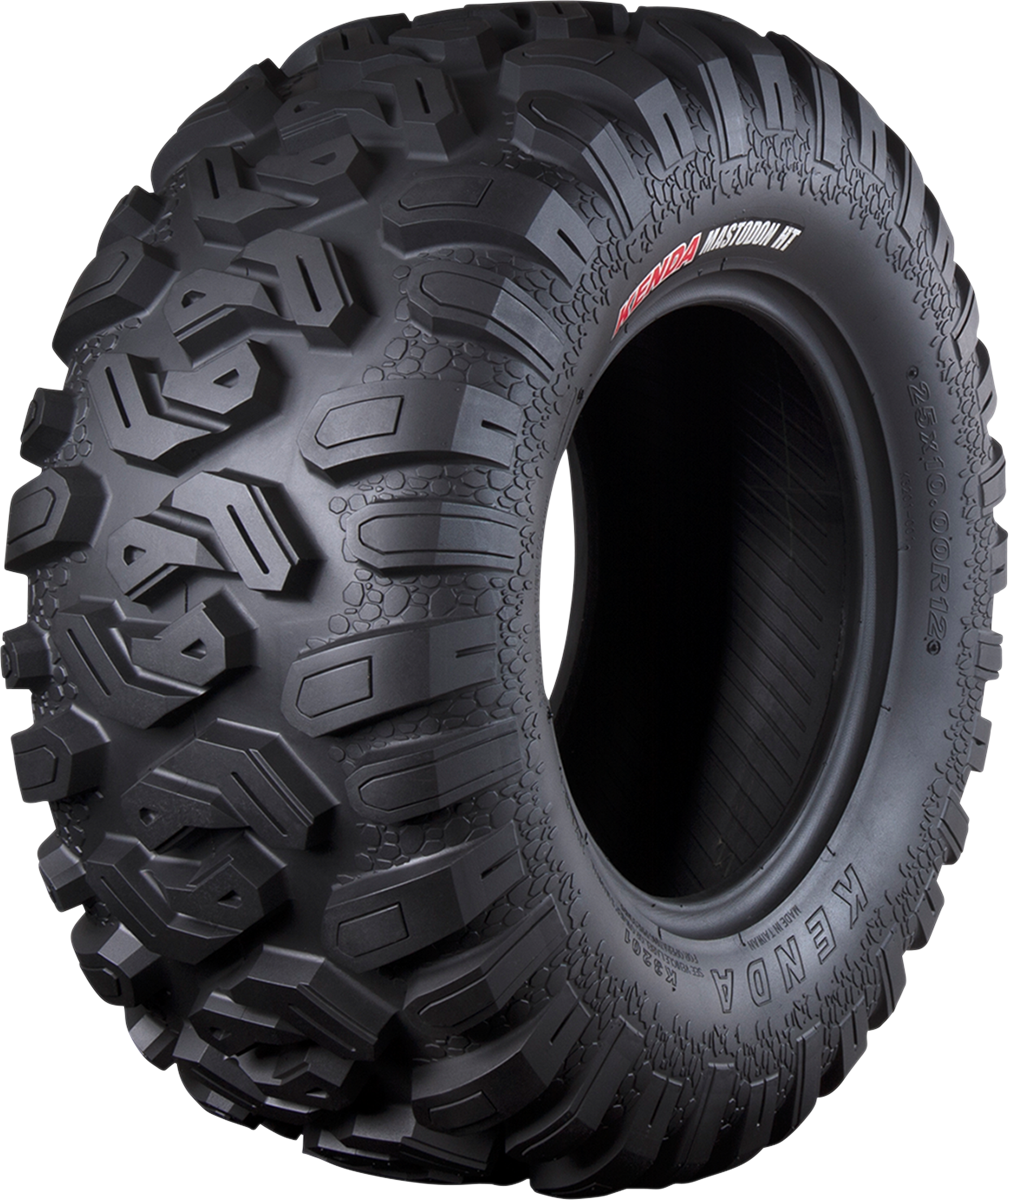 KENDA Tire - K3201 Mastodon HT - Front/Rear - 30x10R14 - 8 Ply 25713025